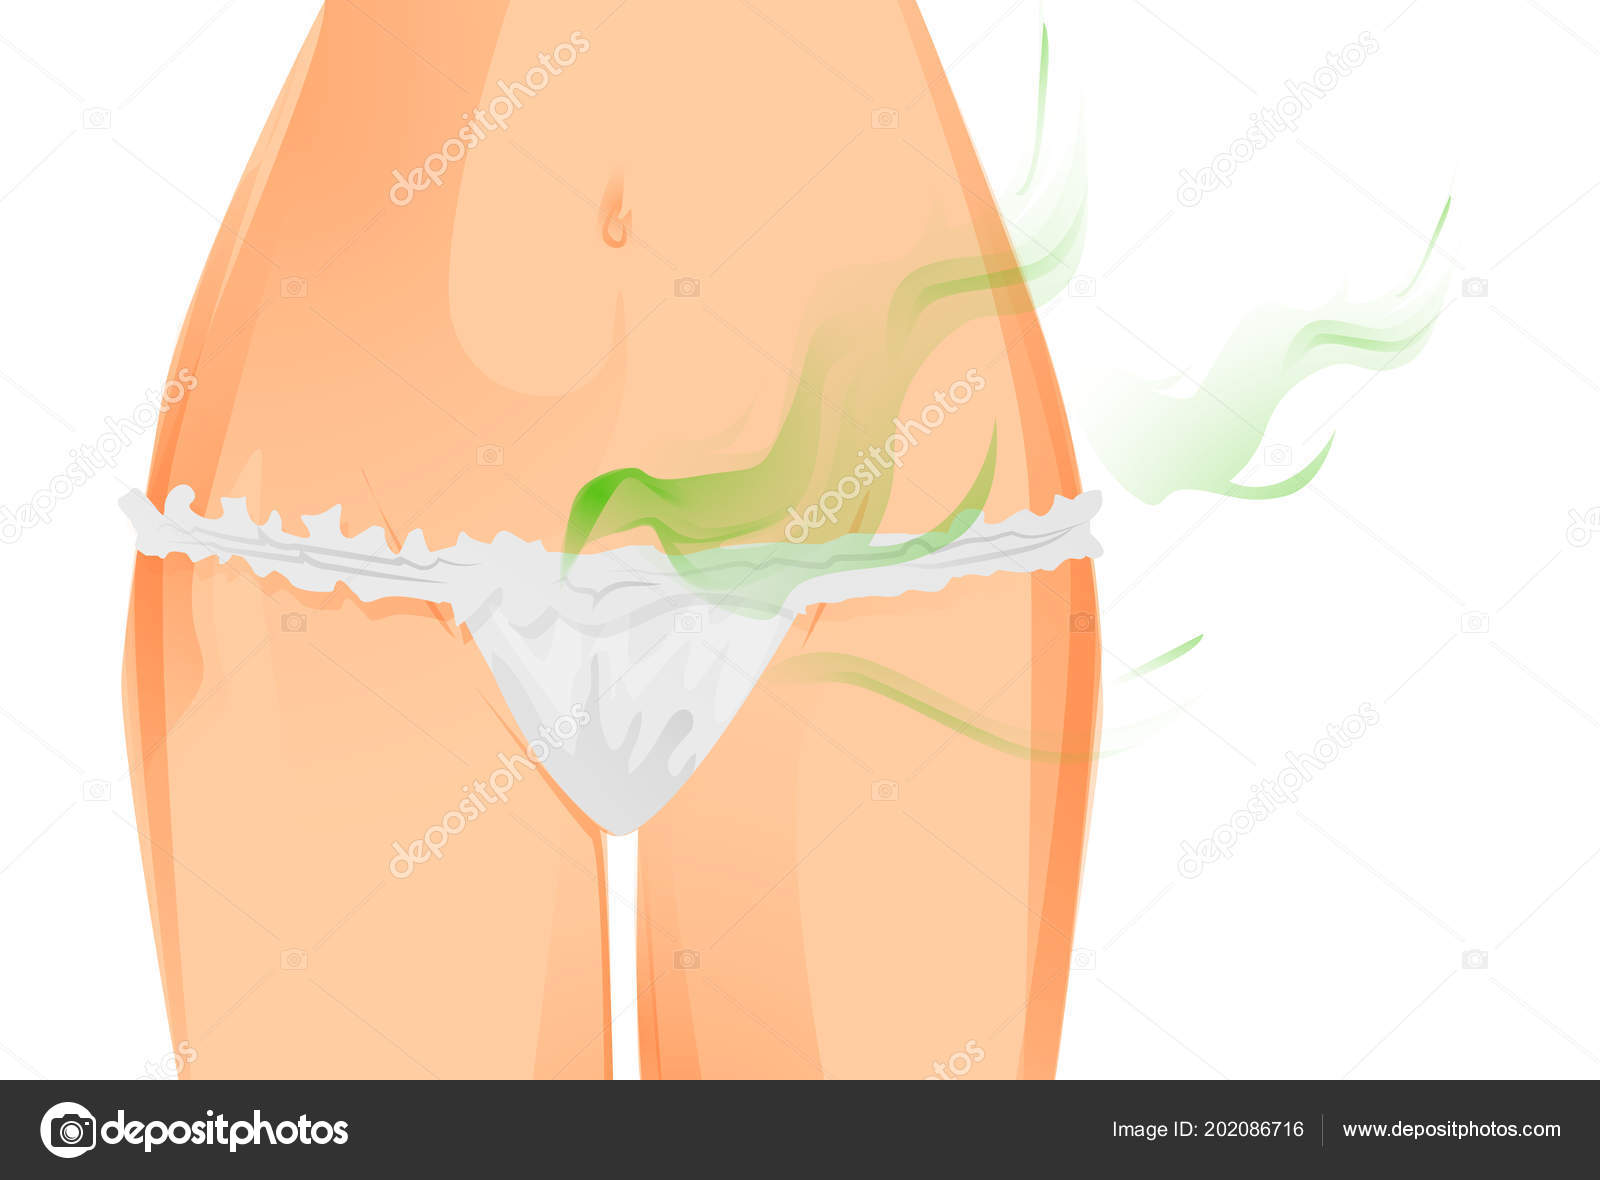 https://st4.depositphotos.com/11411318/20208/v/1600/depositphotos_202086716-stock-illustration-woman-vagina-smell-green-cloud.jpg